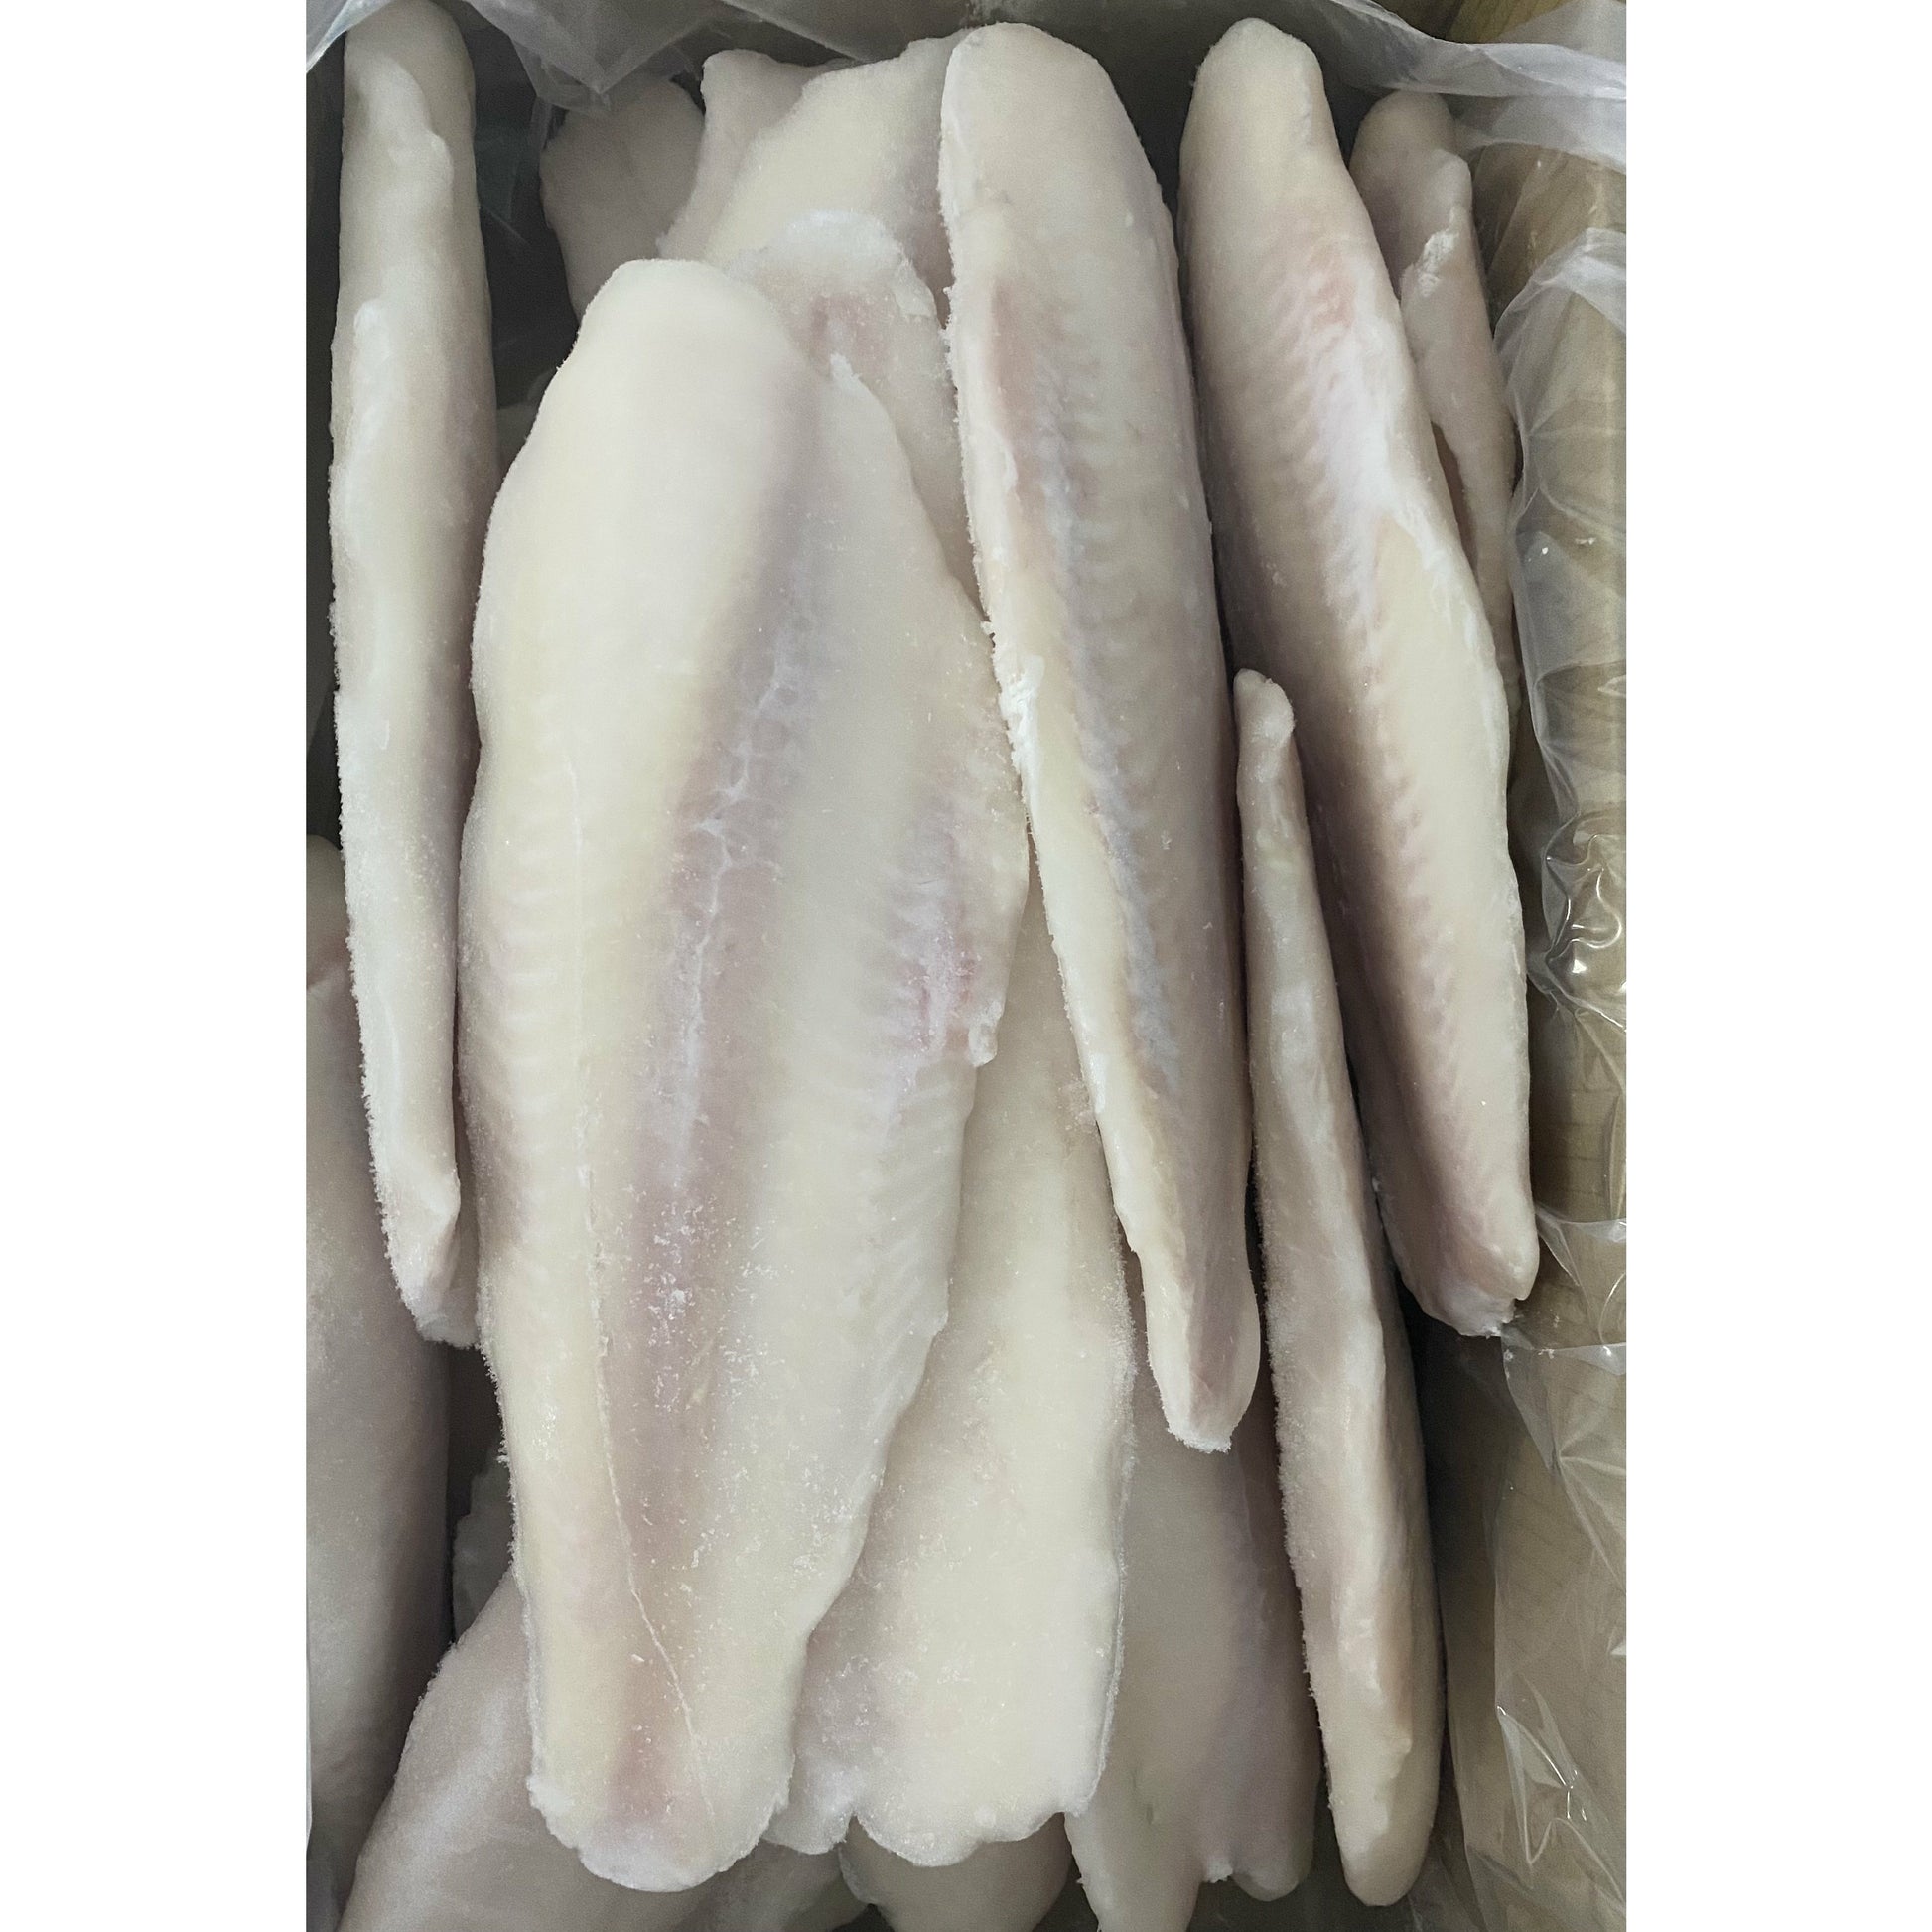 Long Lee Fish Fillet 15 lbs/carton – Ginkgo Market